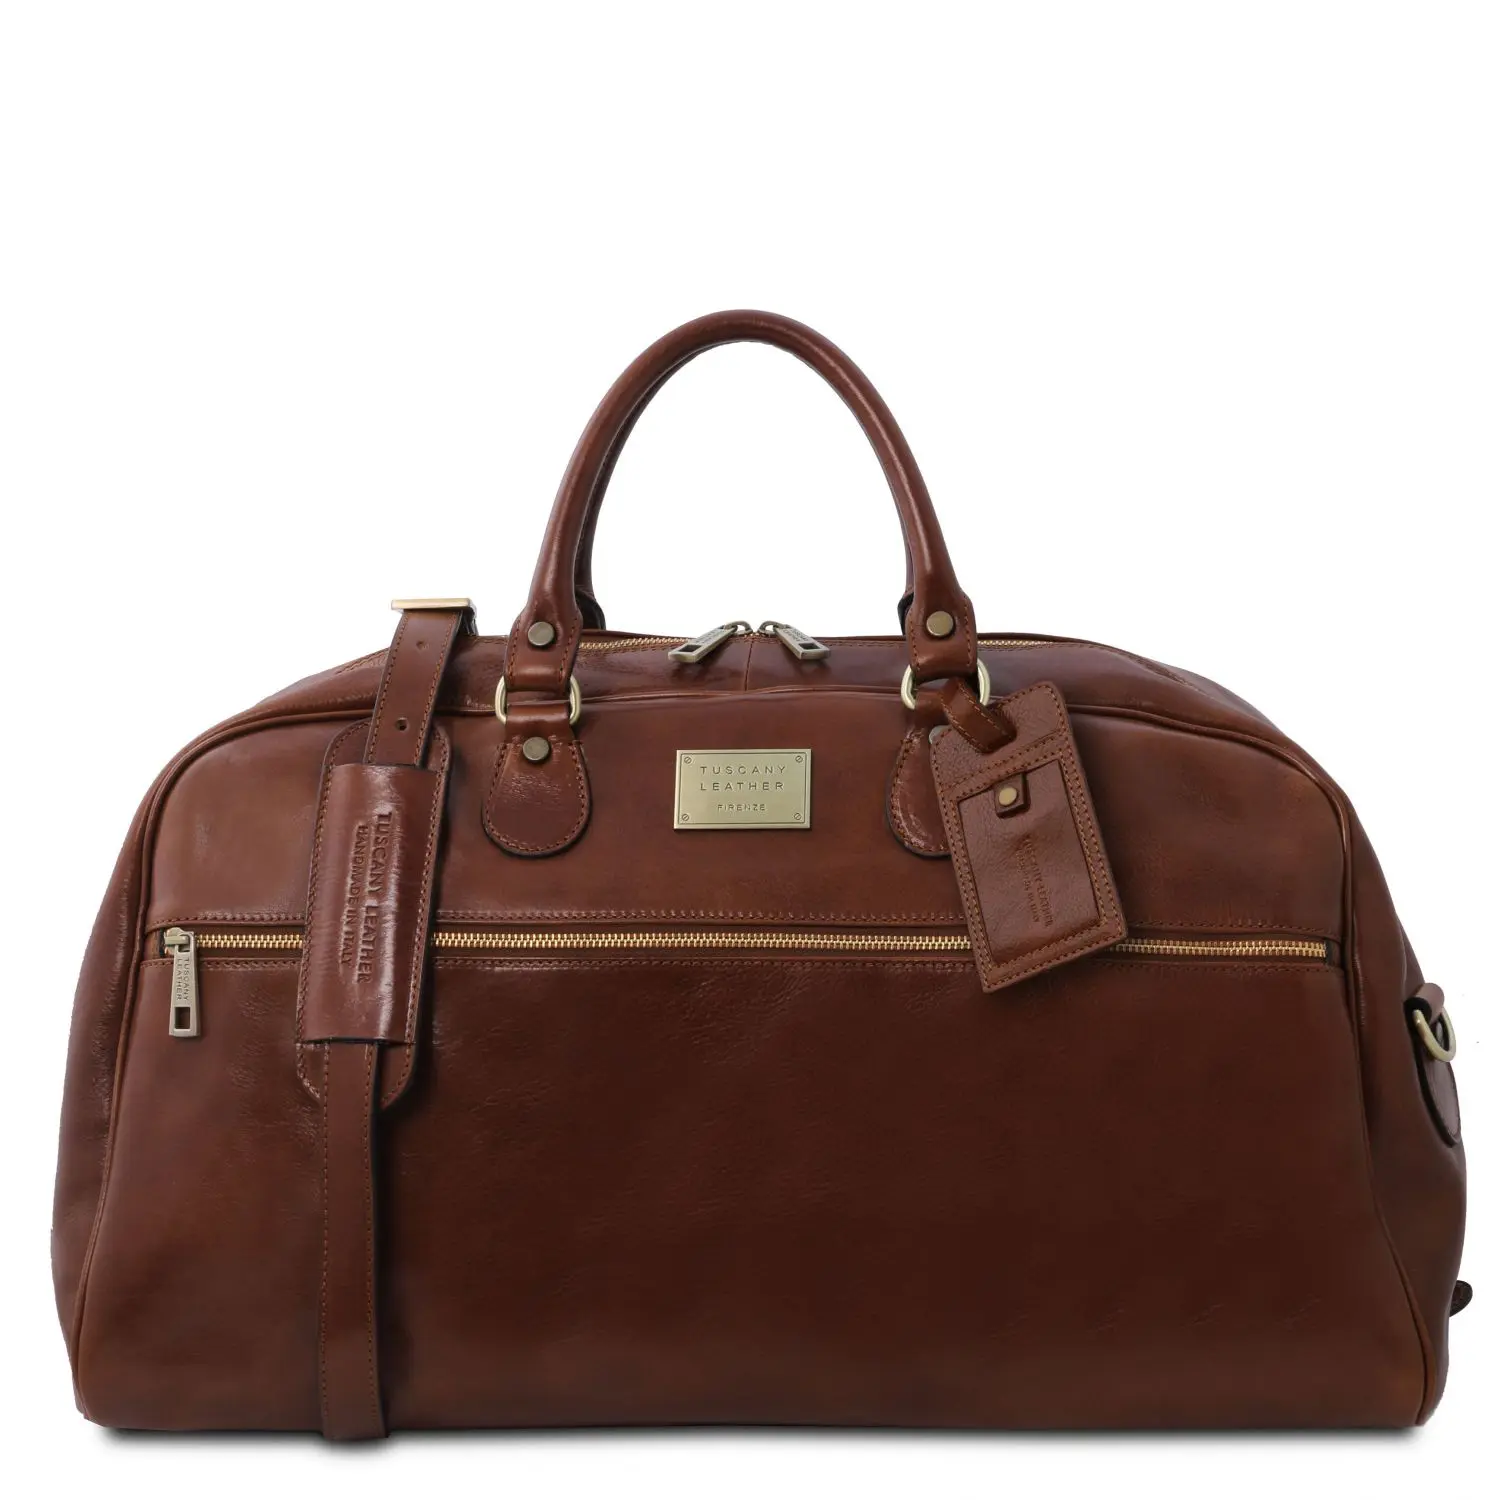 Voyager Leather Travel Bag - Large Size - Hostun - Brown